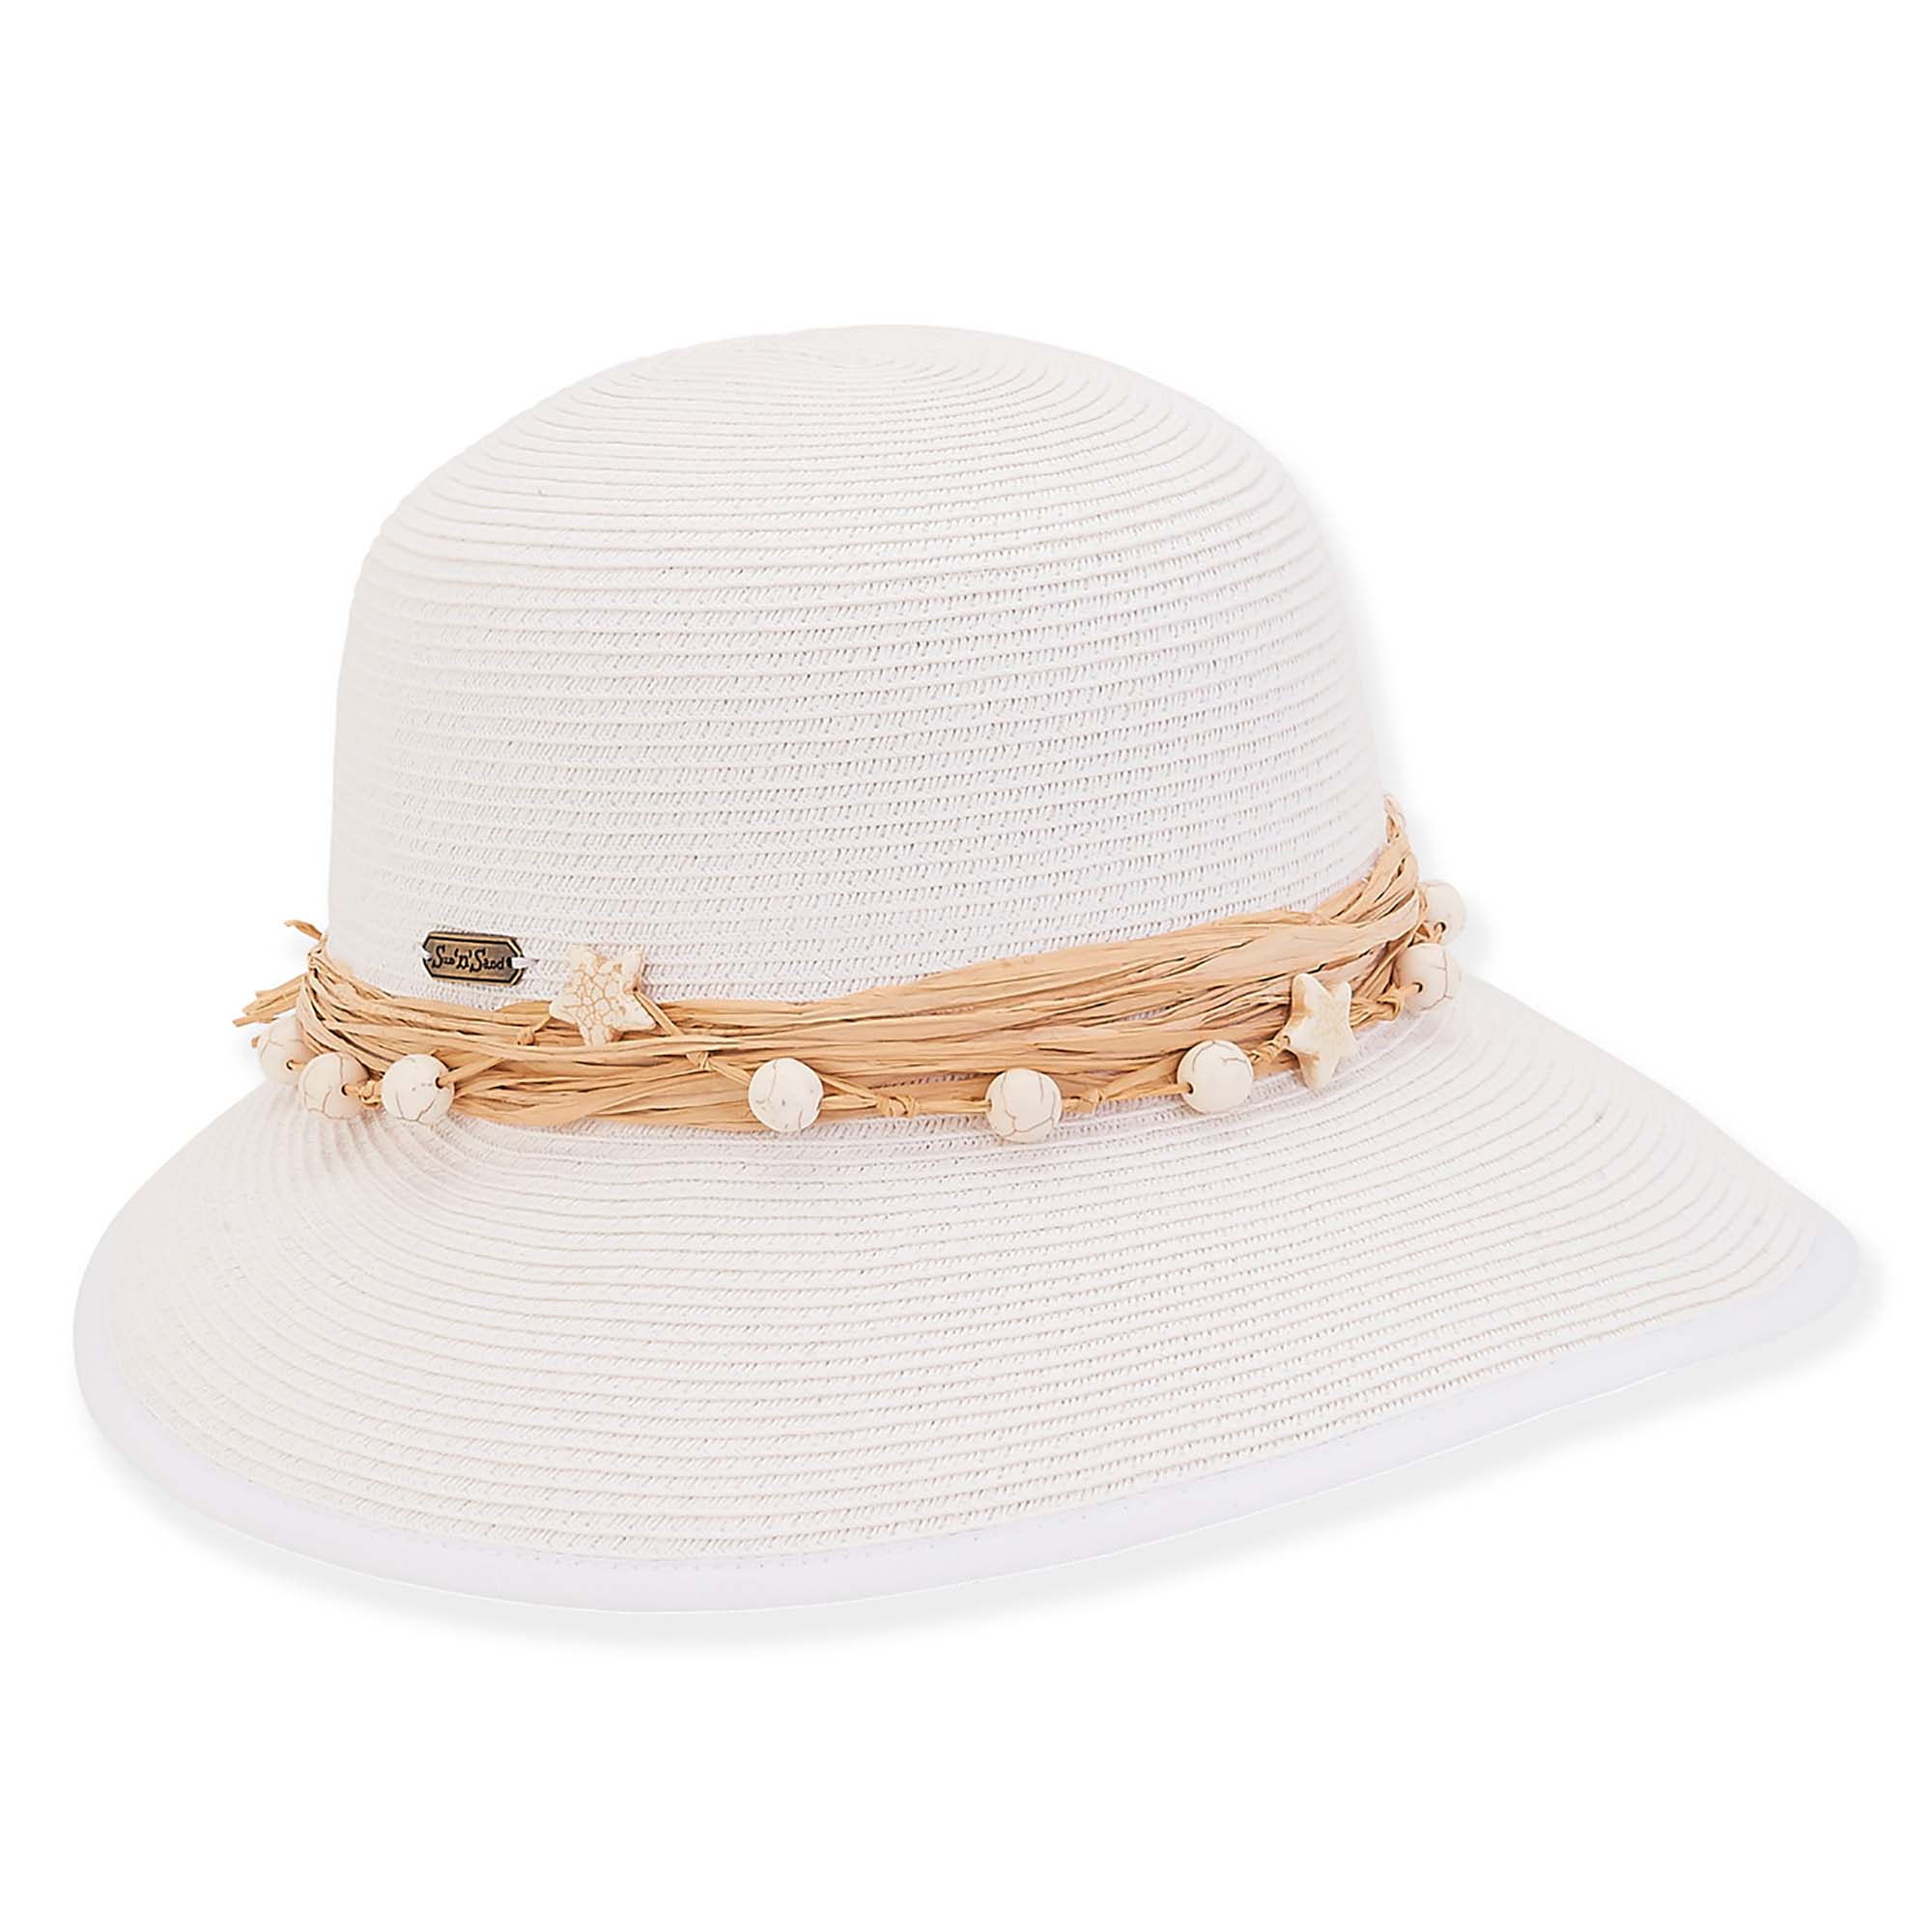 Narrowing Brim White Sun Hat with Raffia and Beads Band - Sun'N'Sand Wide Brim Hat Sun N Sand Hats HH2638A White OS (57 cm) 